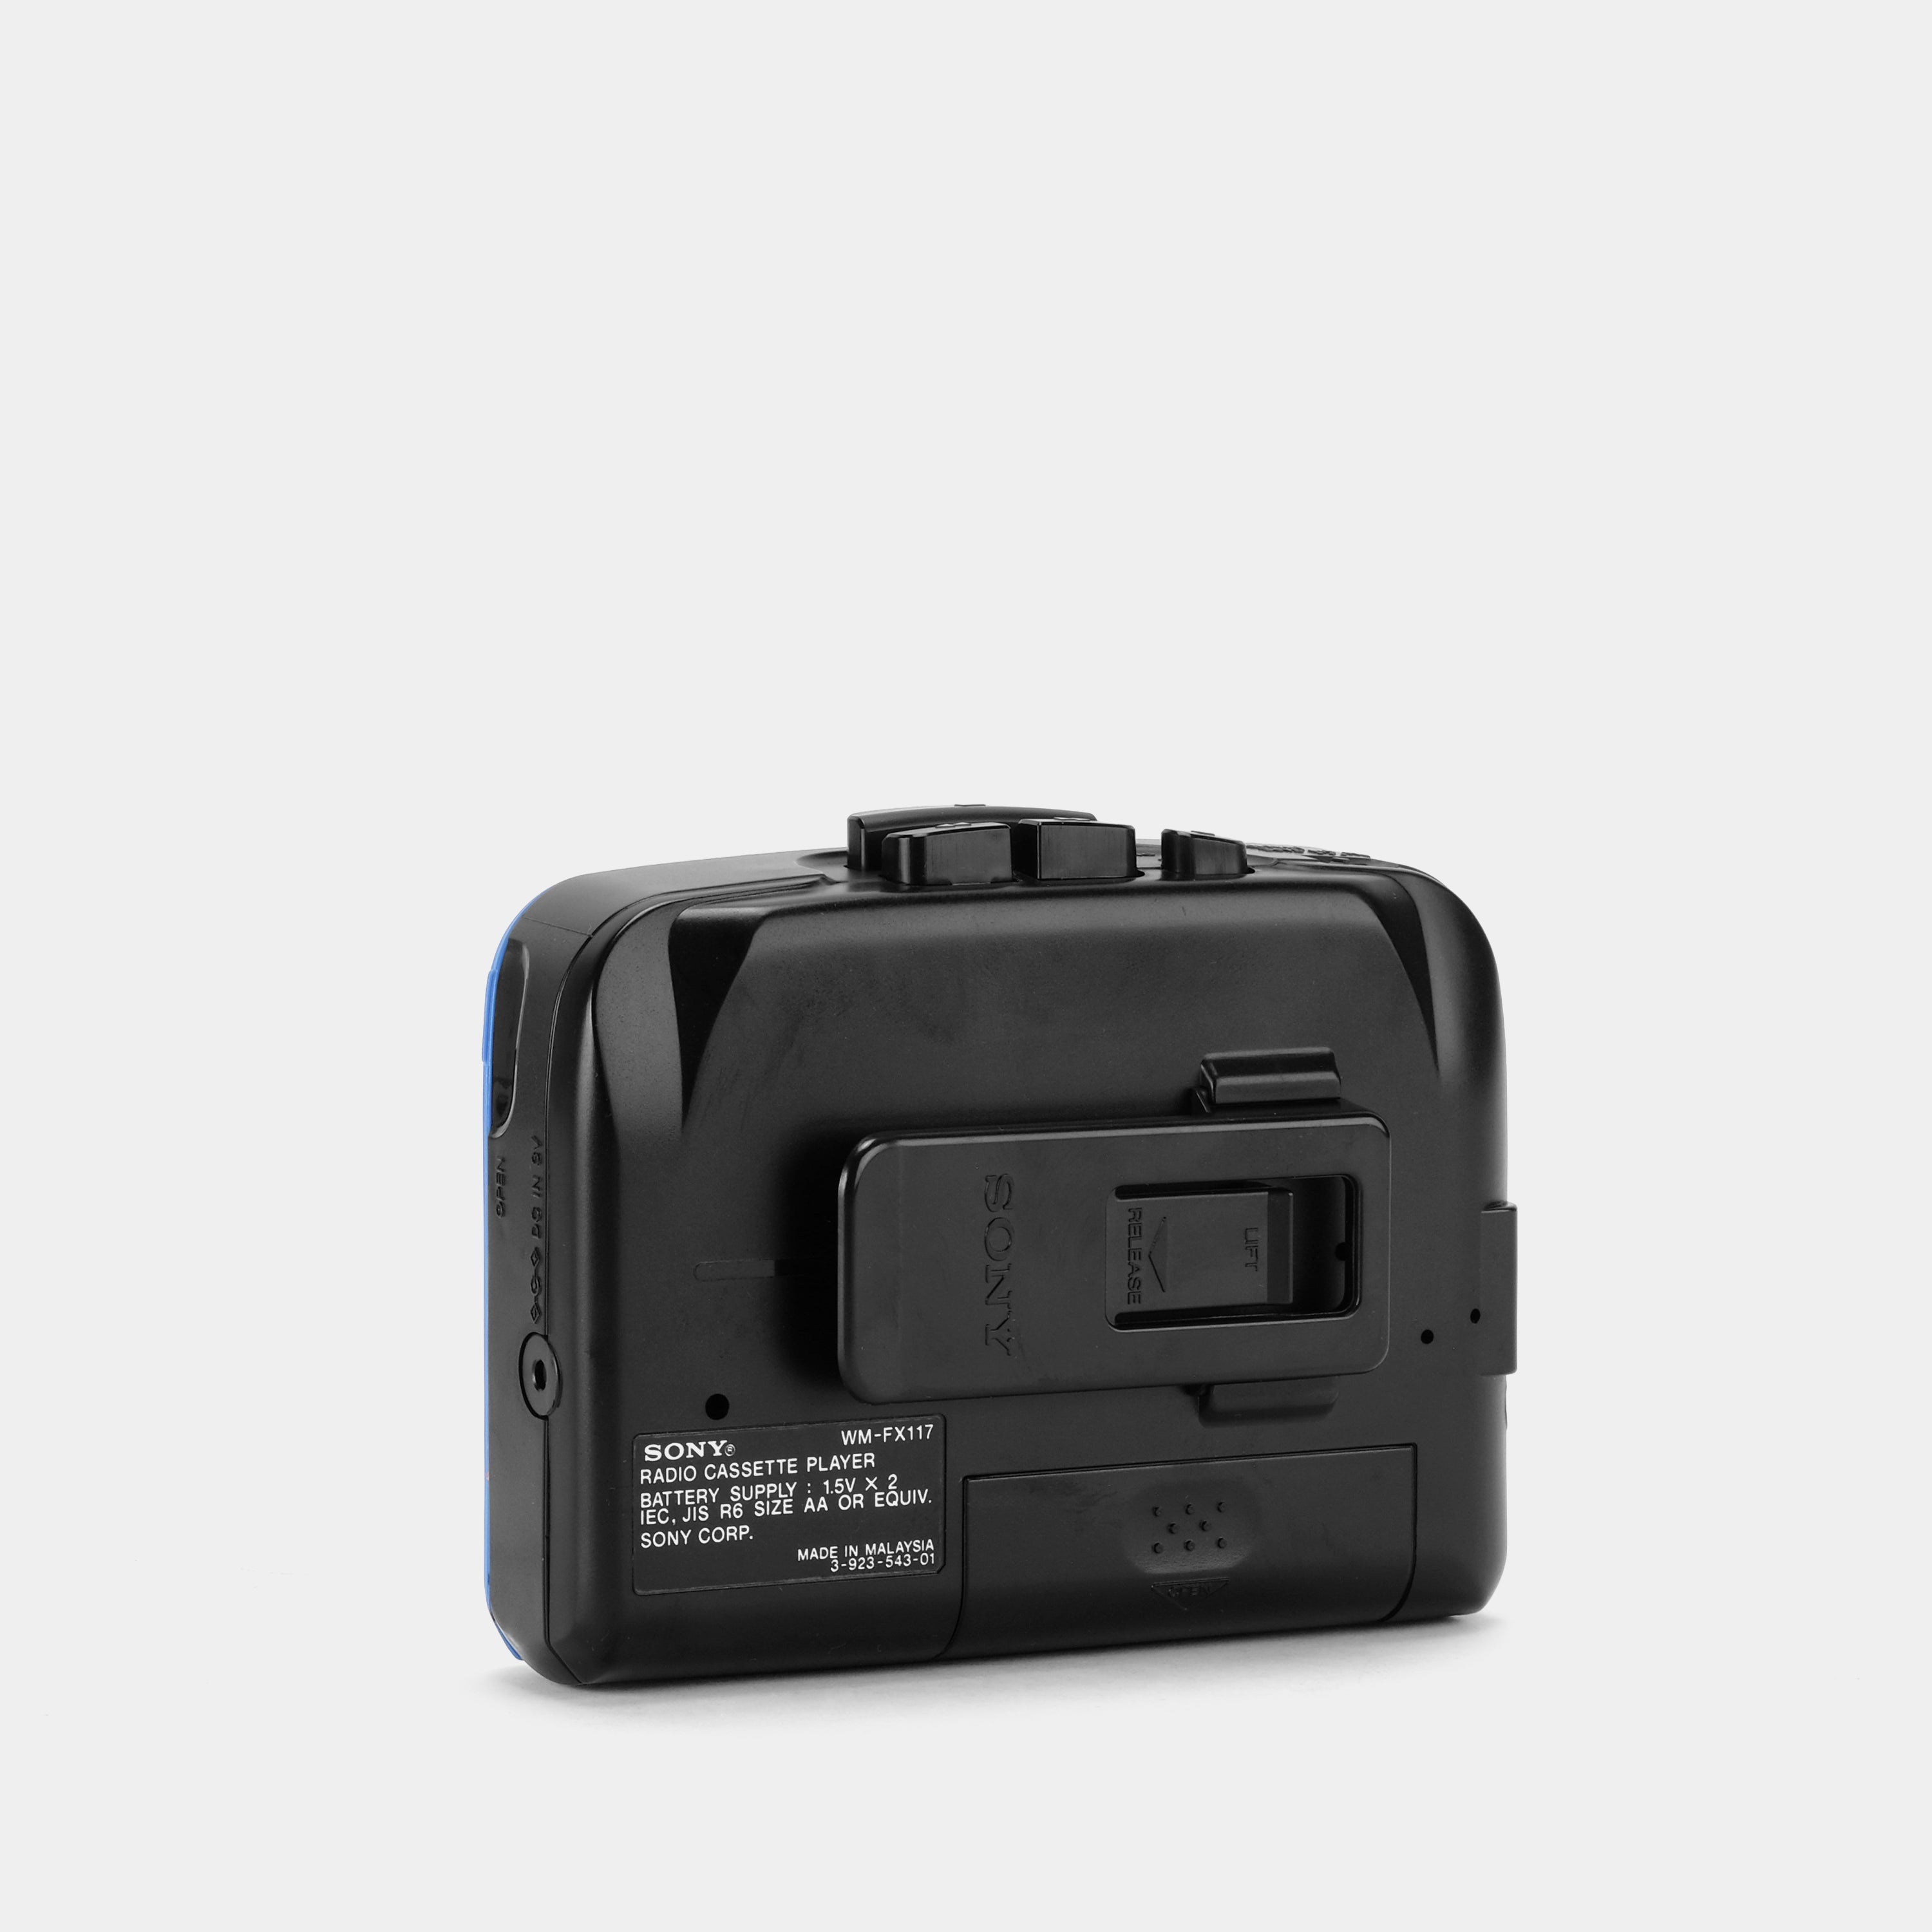 Sony Walkman WM-FX113 AM/FM Blue Portable Cassette Player